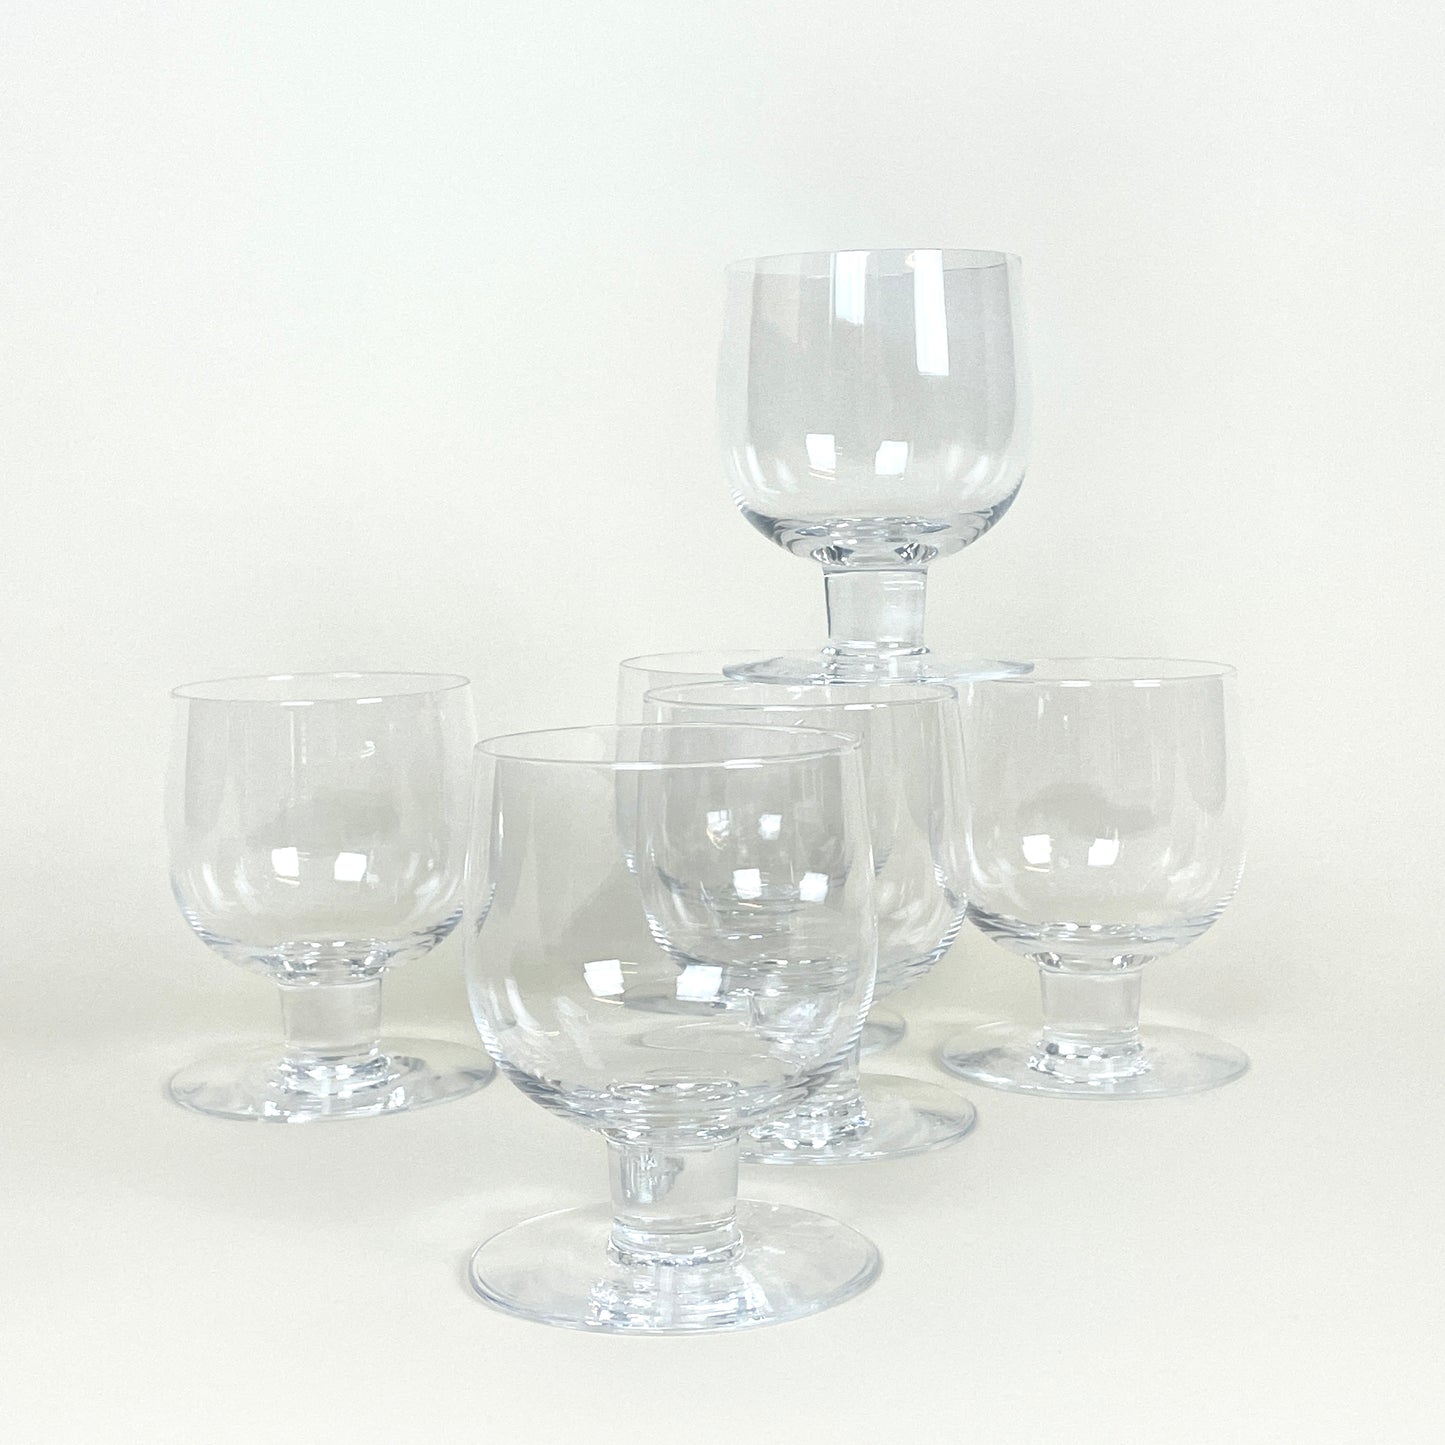 Simon Klenell & Arranging Things "Coupe Du Monde" 6 x wine glasses